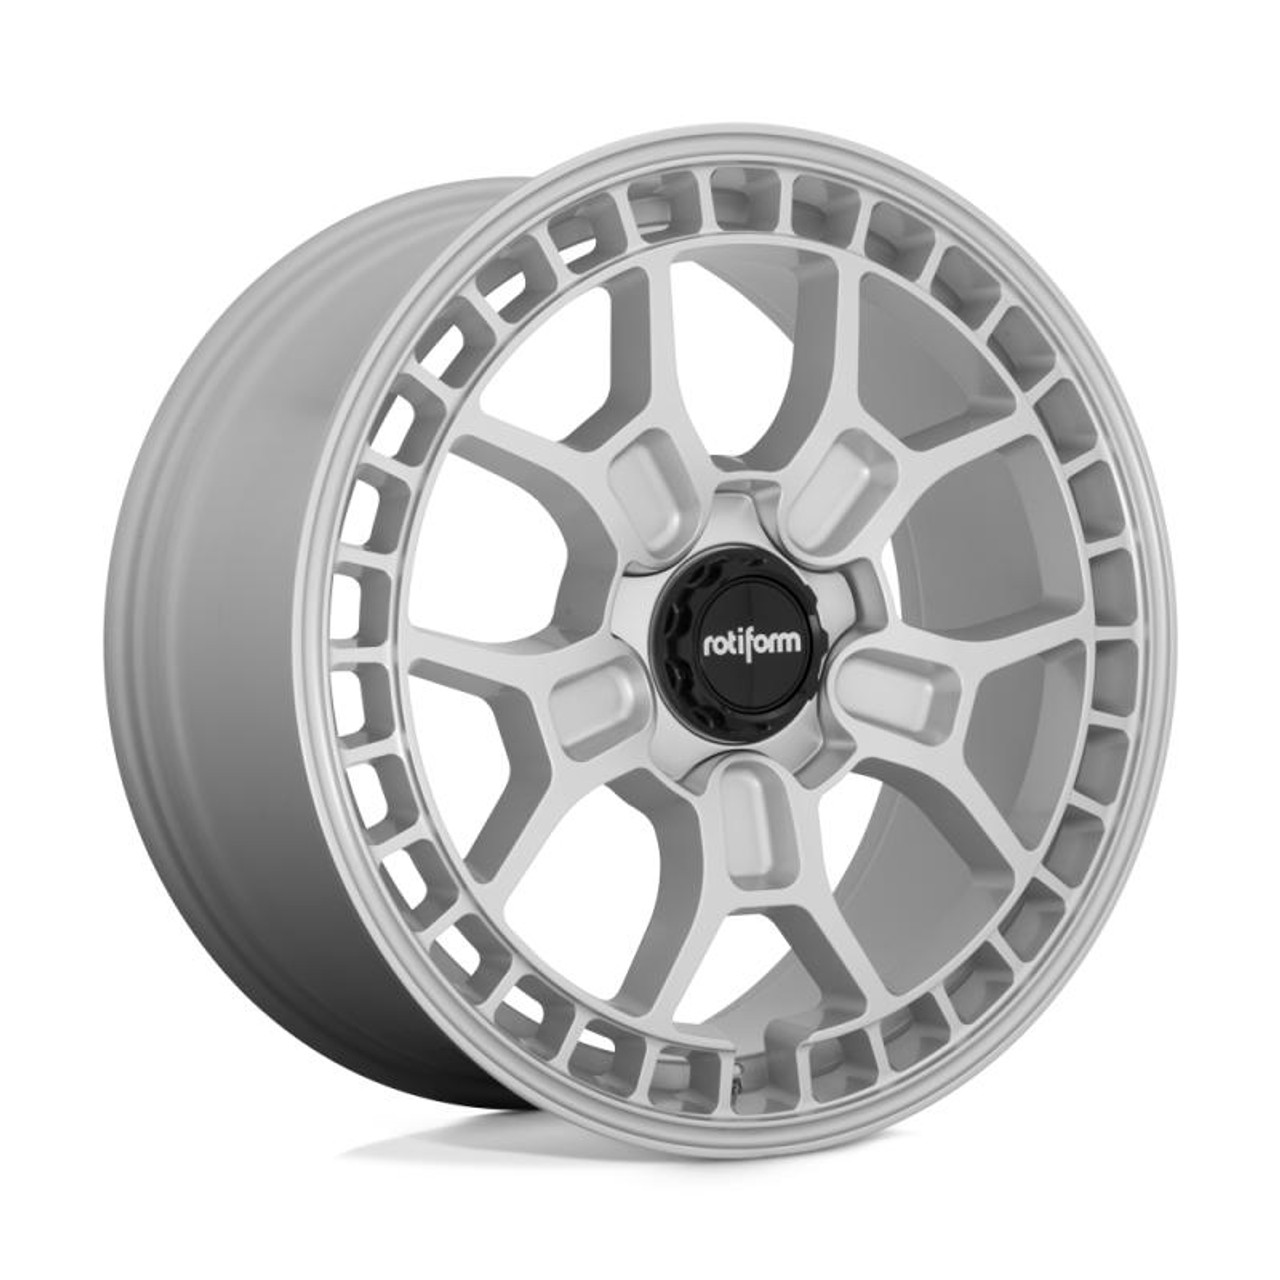  Rotiform R182 ZMO-M Wheel 19x8.5 5x108 45 Offset - Gloss Silver - R182198531+45 